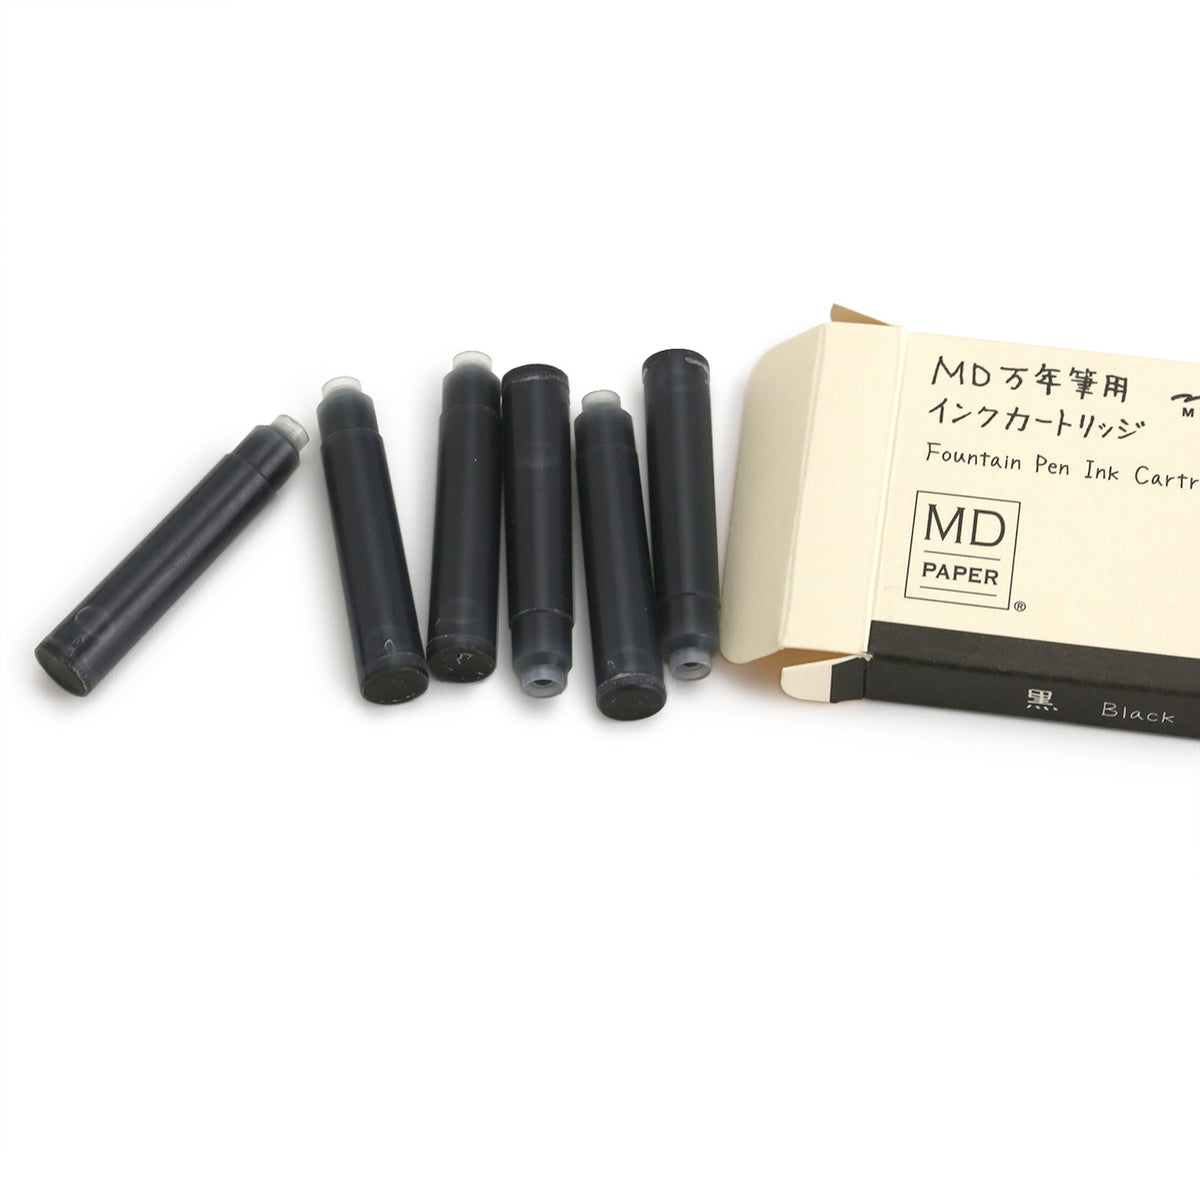 Black fountean pen black ink cartridges beside their box